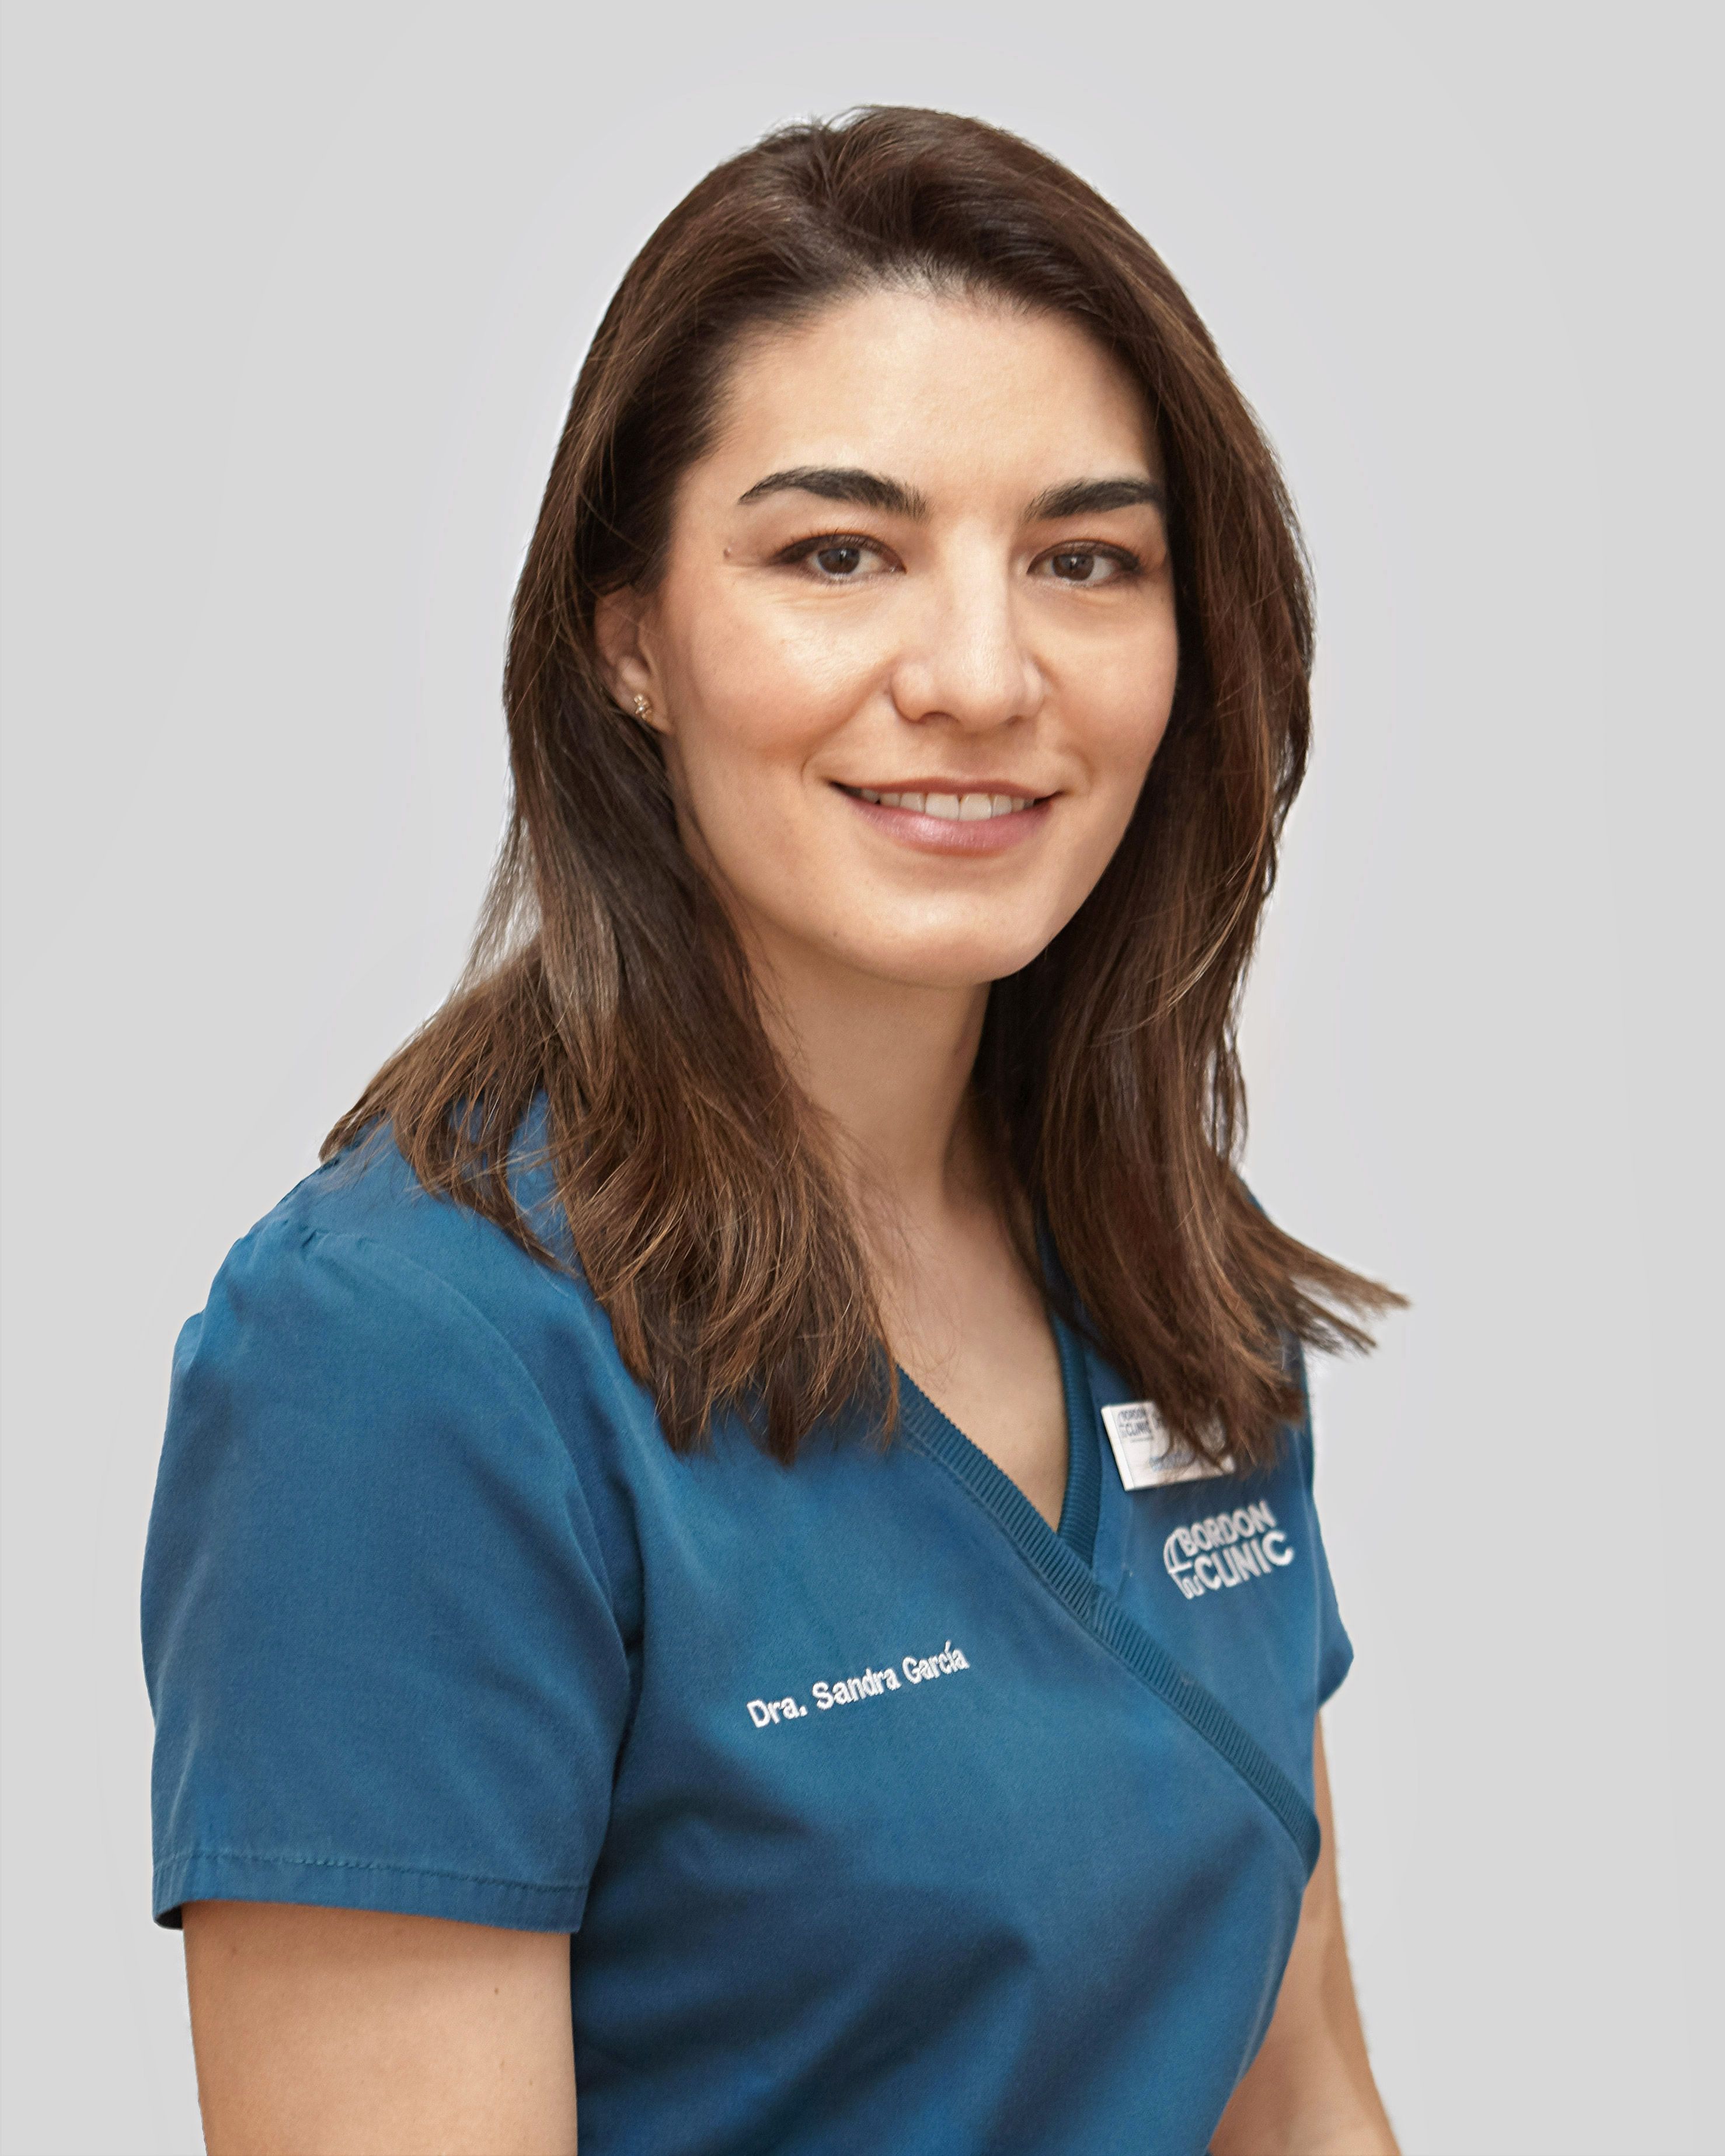 Dra. Sandra García - Clínica Dental BordonClinic